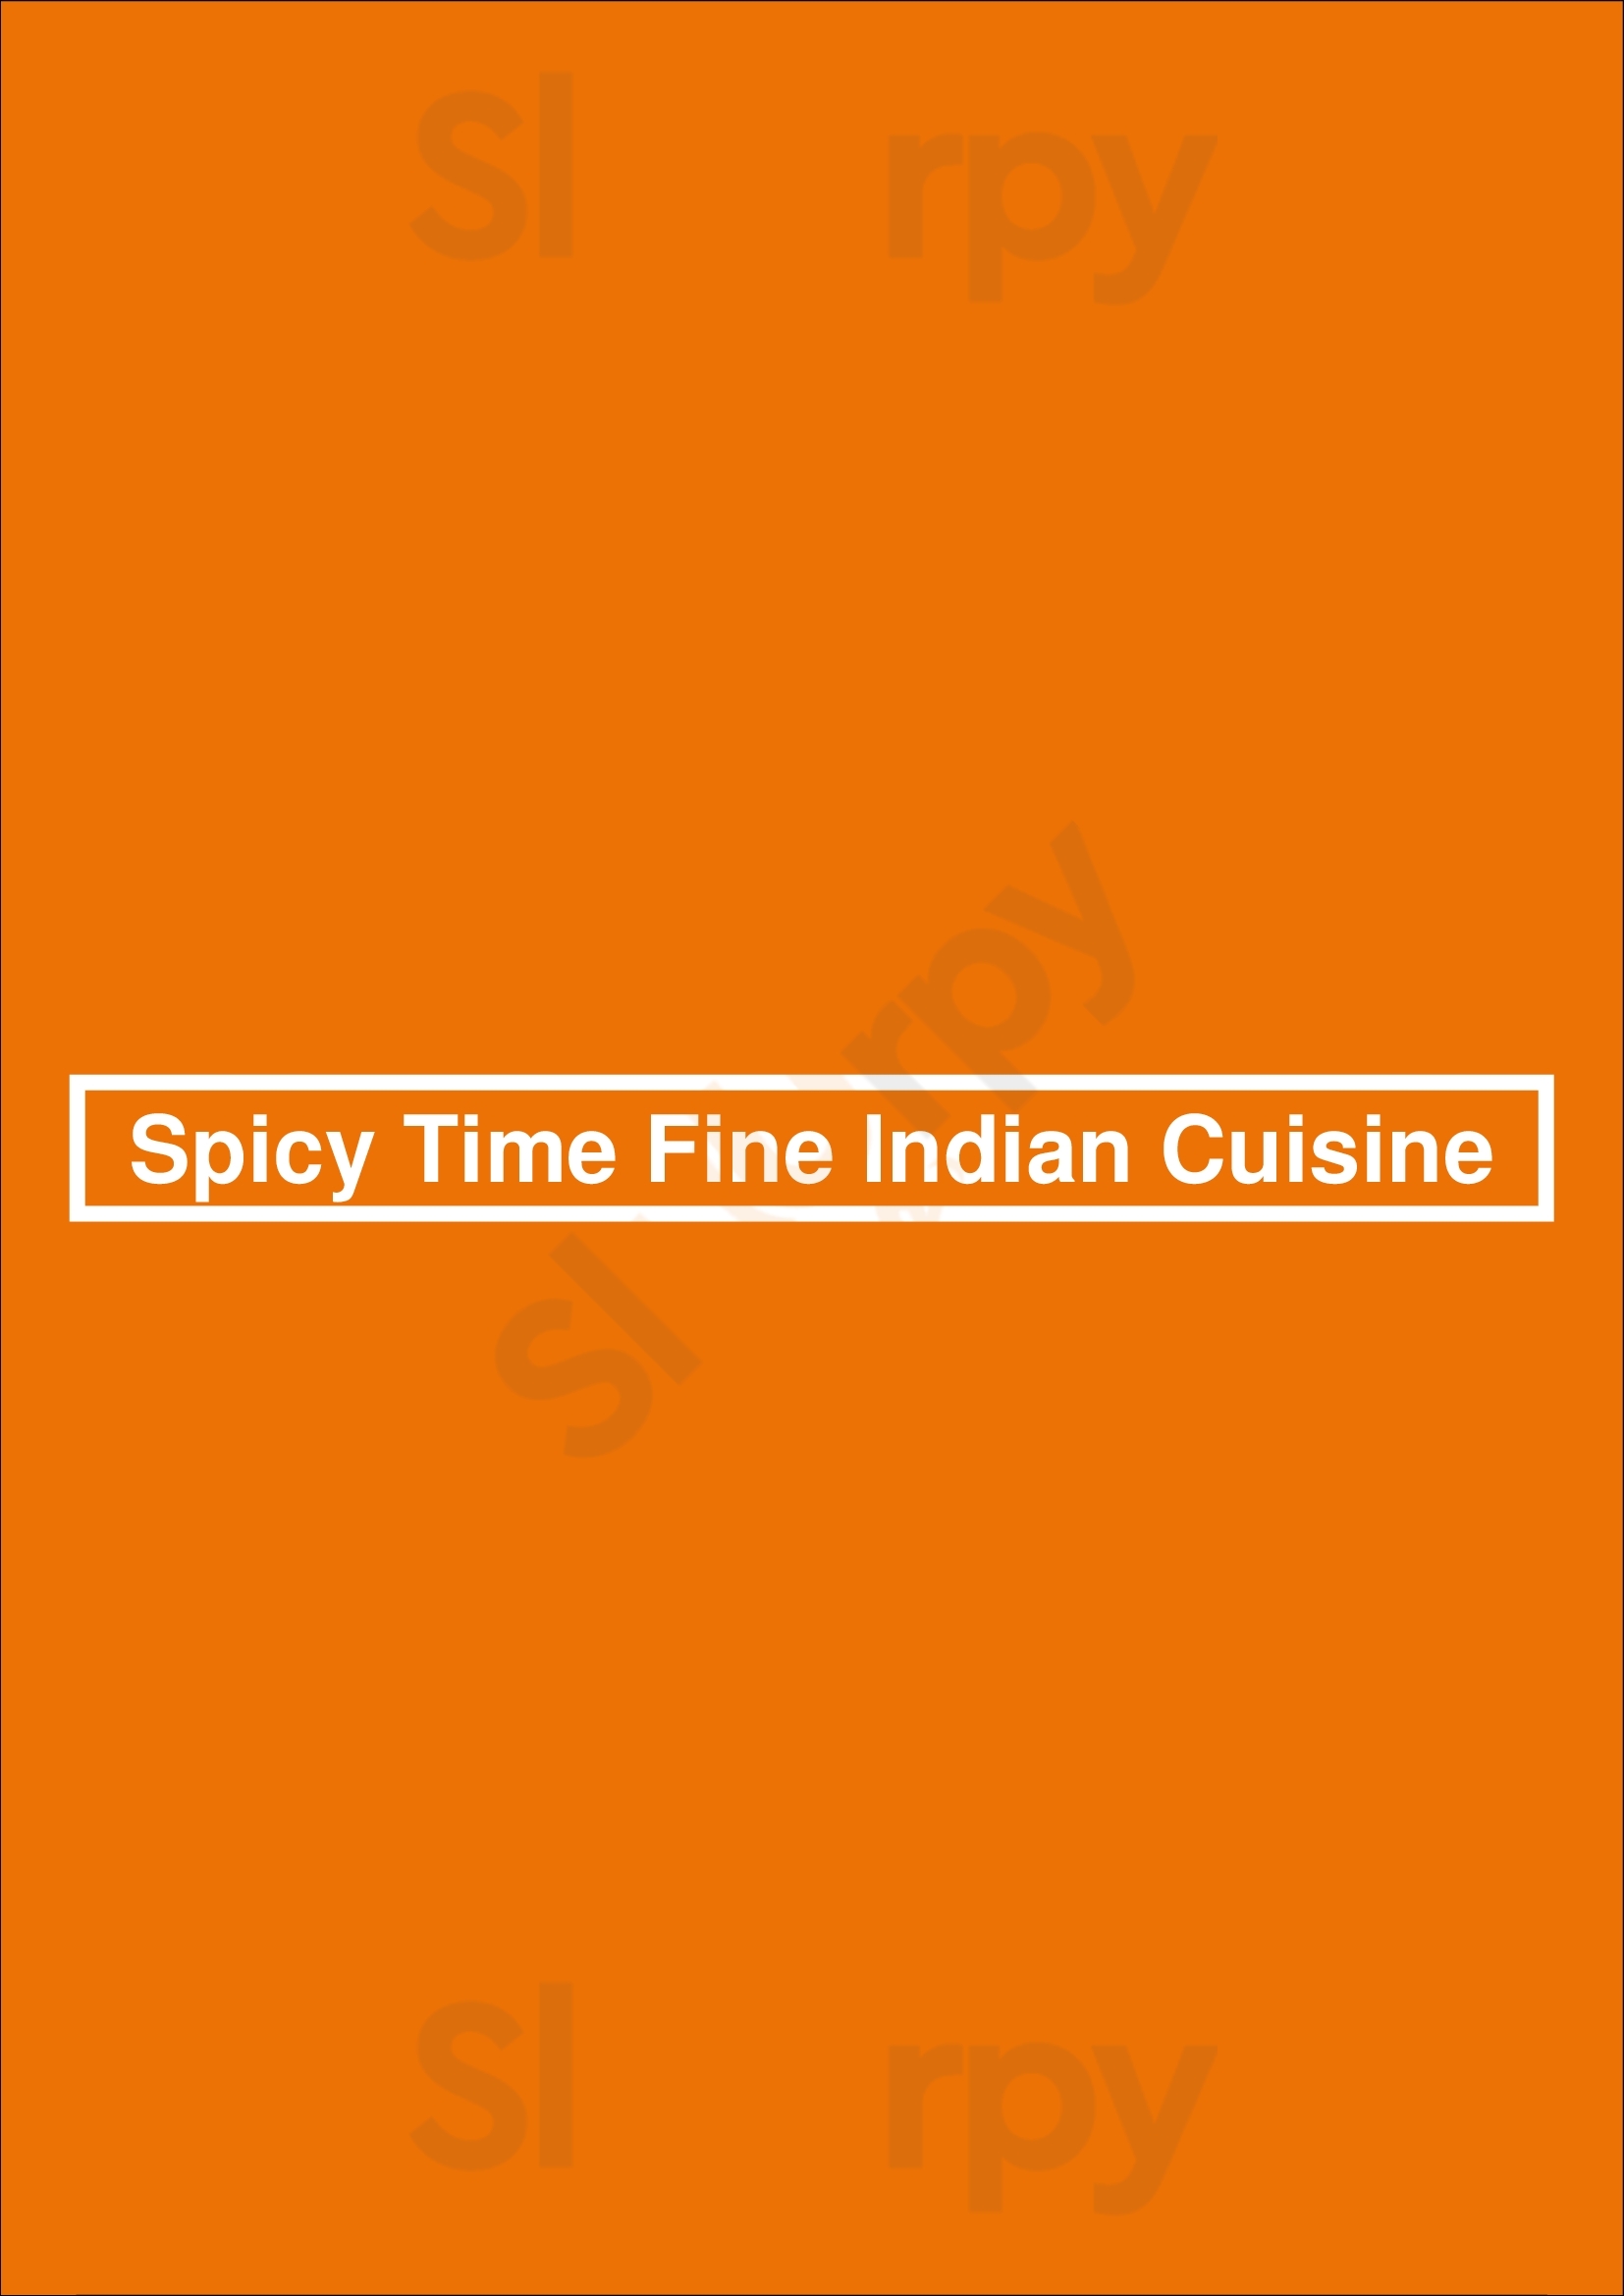 Spicy Time Fine Indian Cuisine Saskatoon Menu - 1